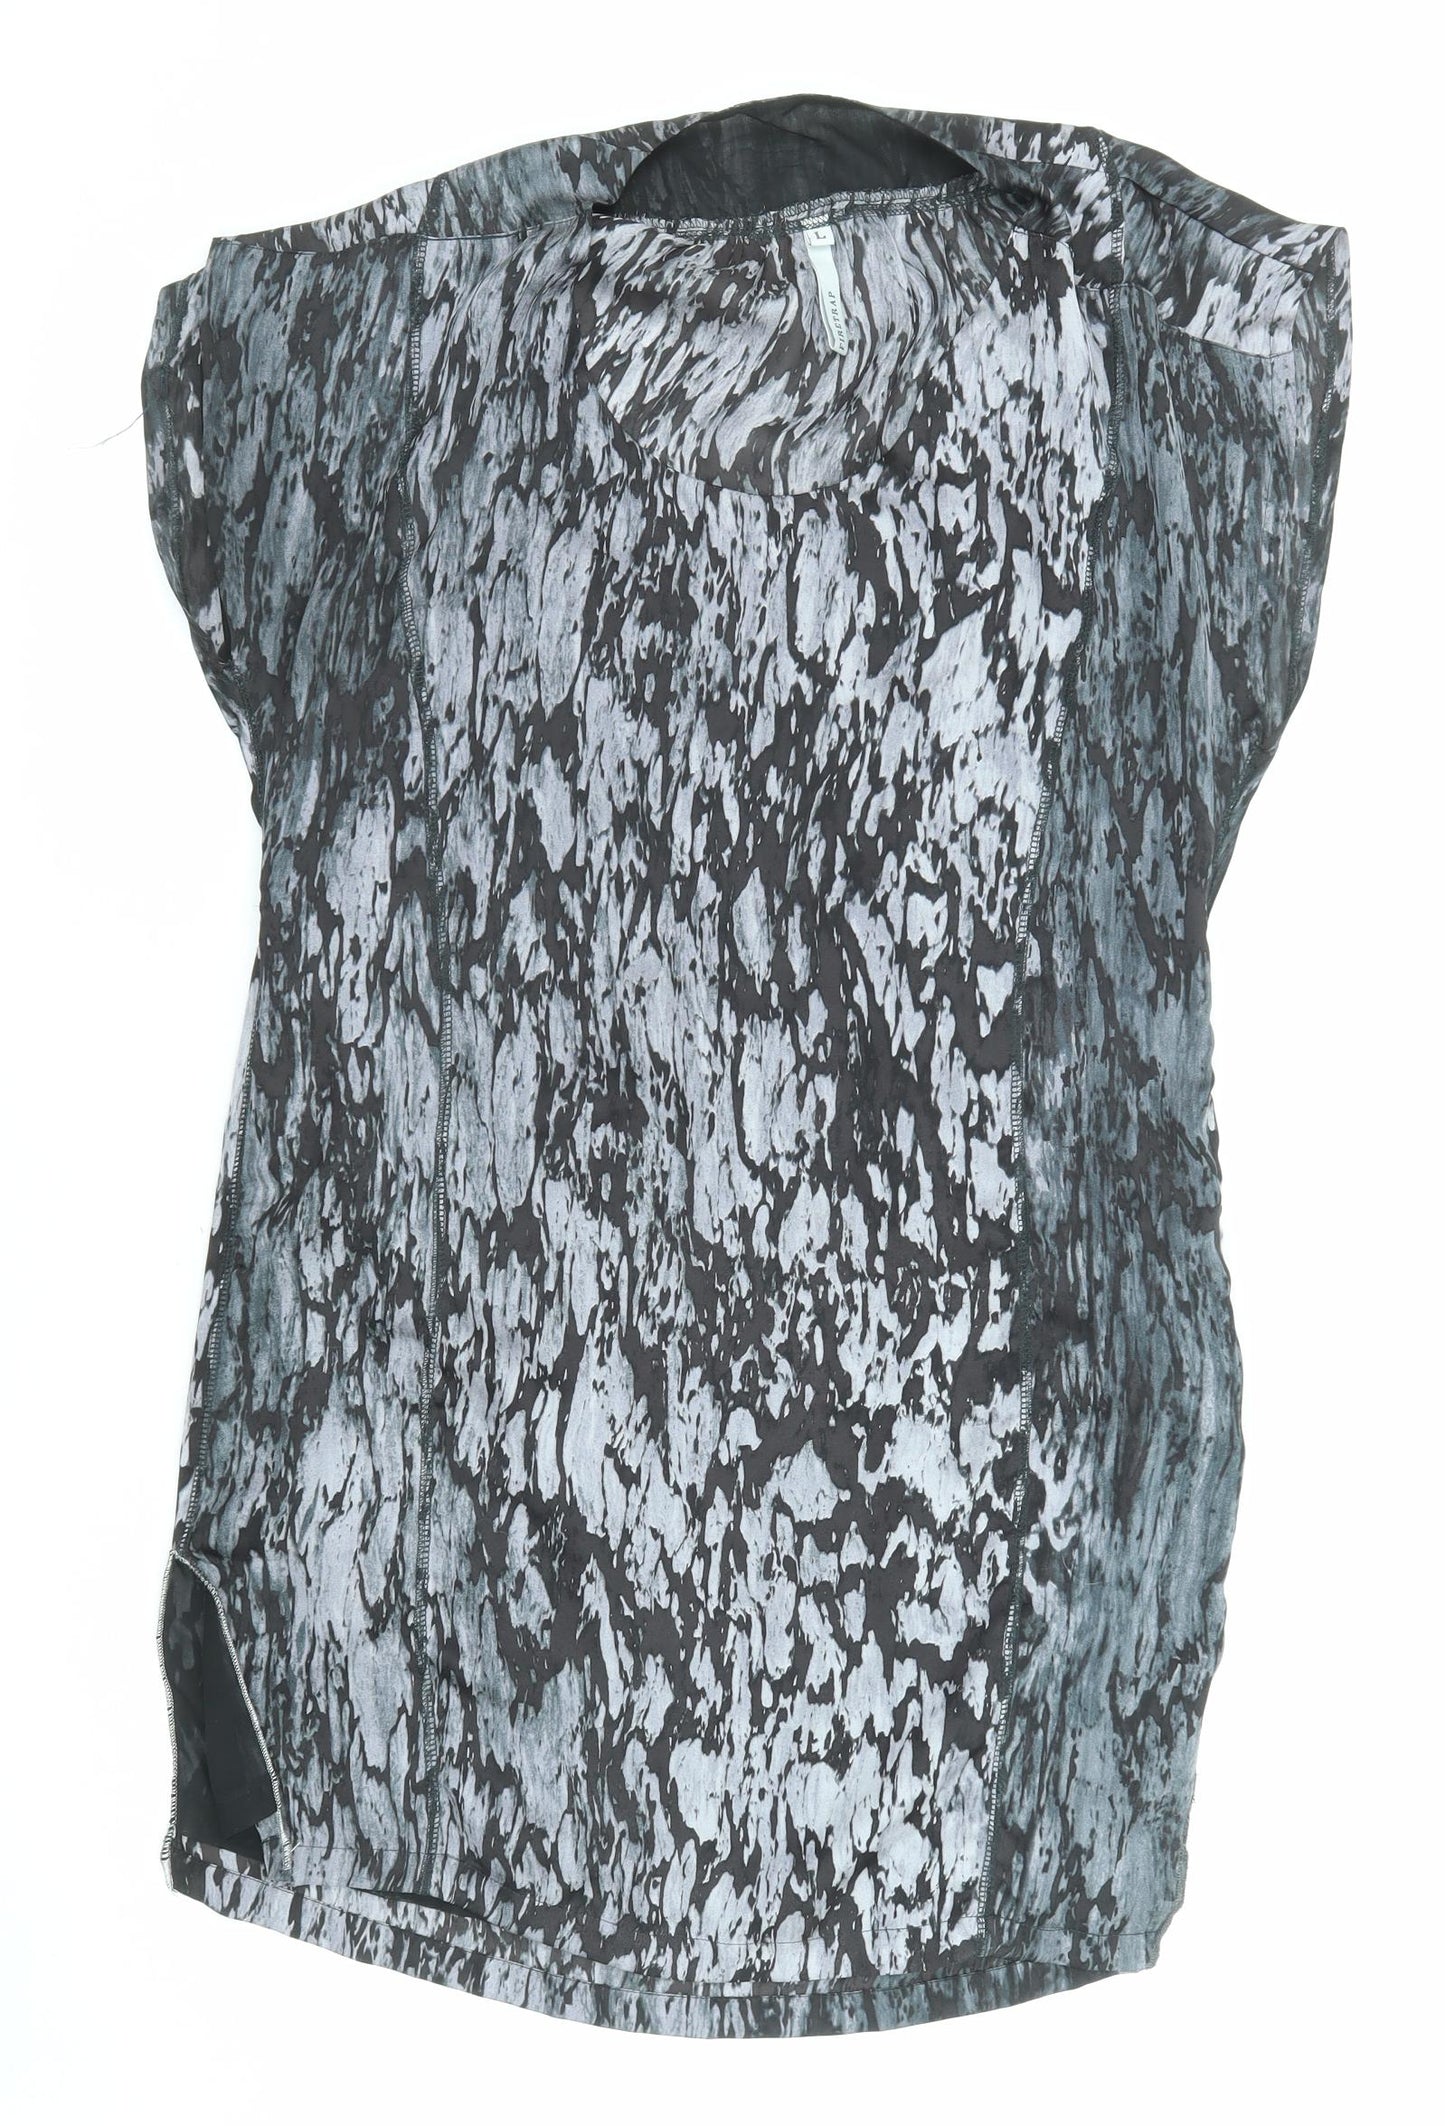 Firetrap Womens Black Animal Print Polyester A-Line Size L Boat Neck Pullover - Snakeskin pattern